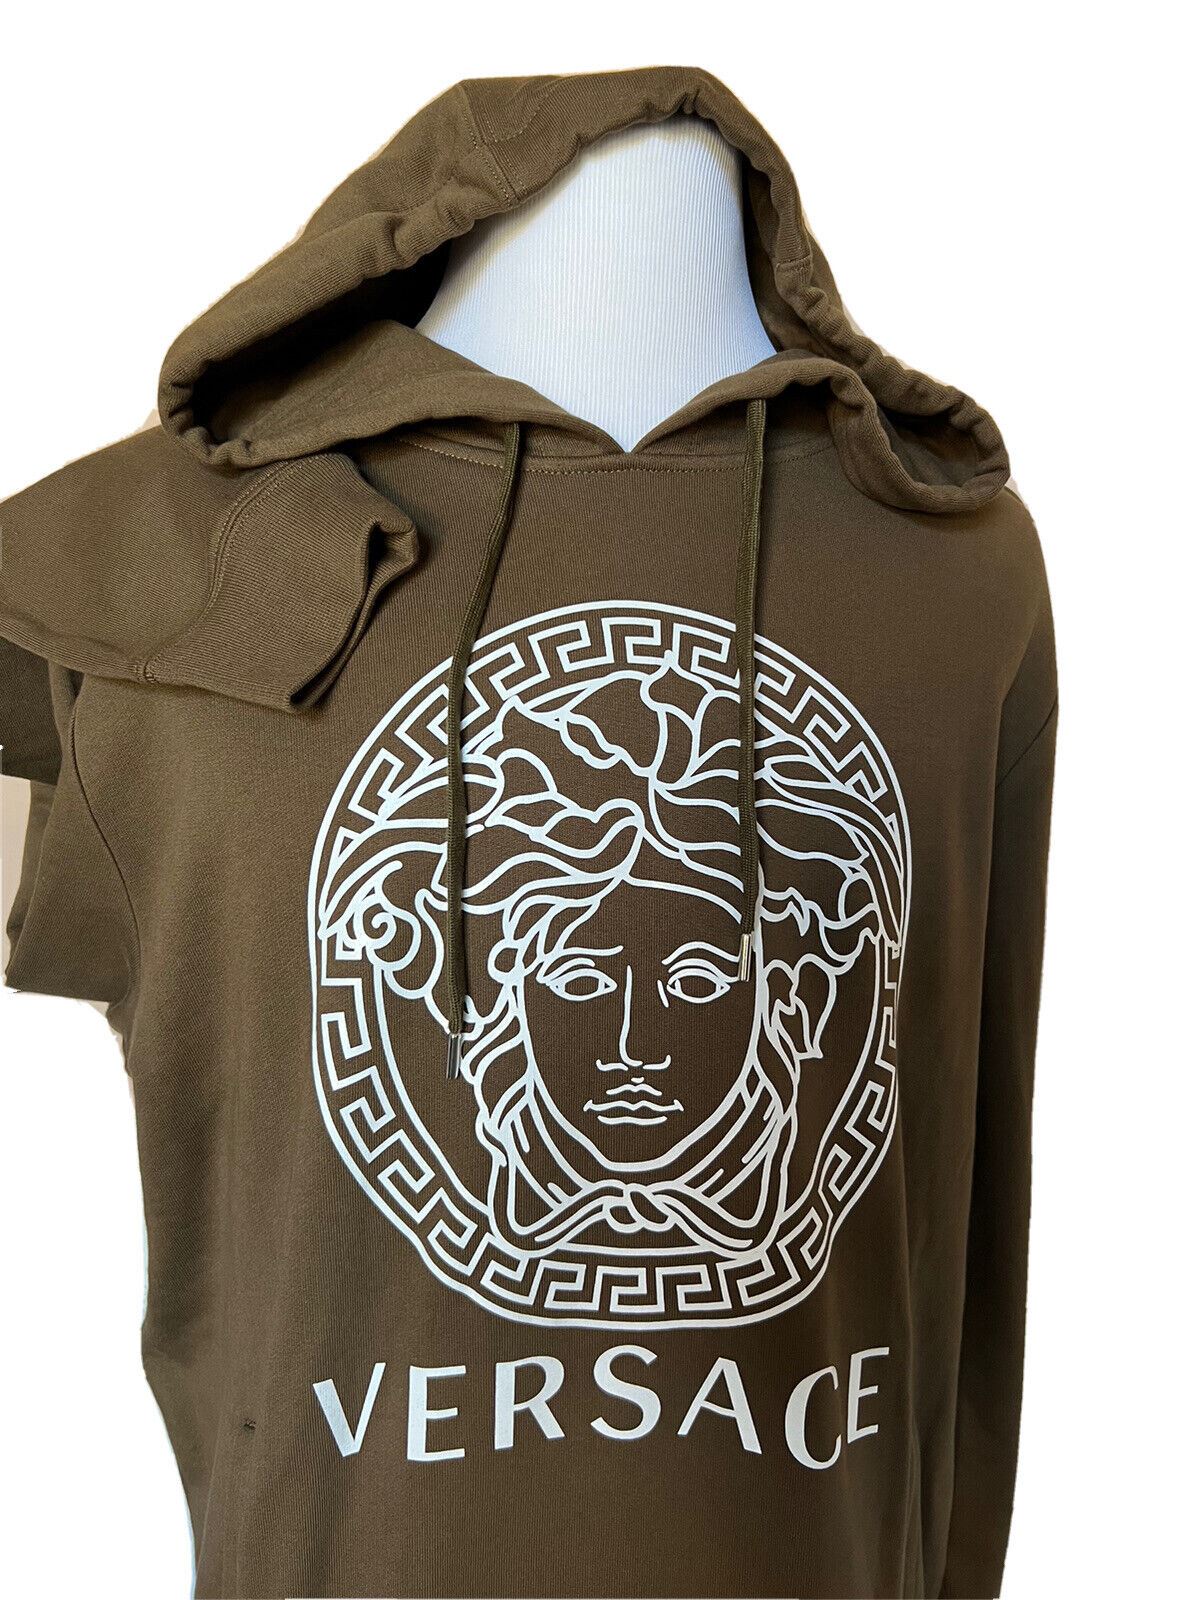 Neu mit Etikett: 750 $ Versace Medusa Print Olivfarbenes Baumwoll-Sweatshirt mit Kapuze 4XL A89514S IT 